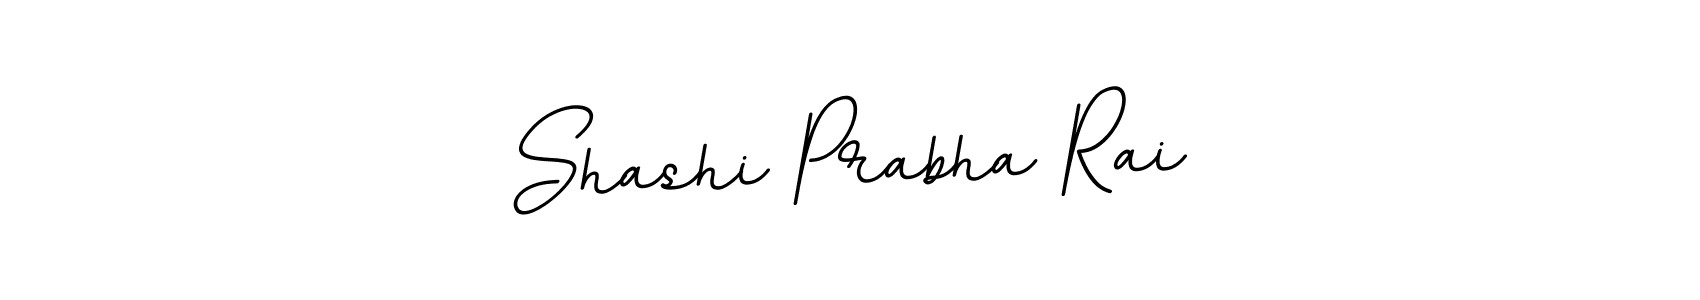 How to Draw Shashi Prabha Rai signature style? BallpointsItalic-DORy9 is a latest design signature styles for name Shashi Prabha Rai. Shashi Prabha Rai signature style 11 images and pictures png